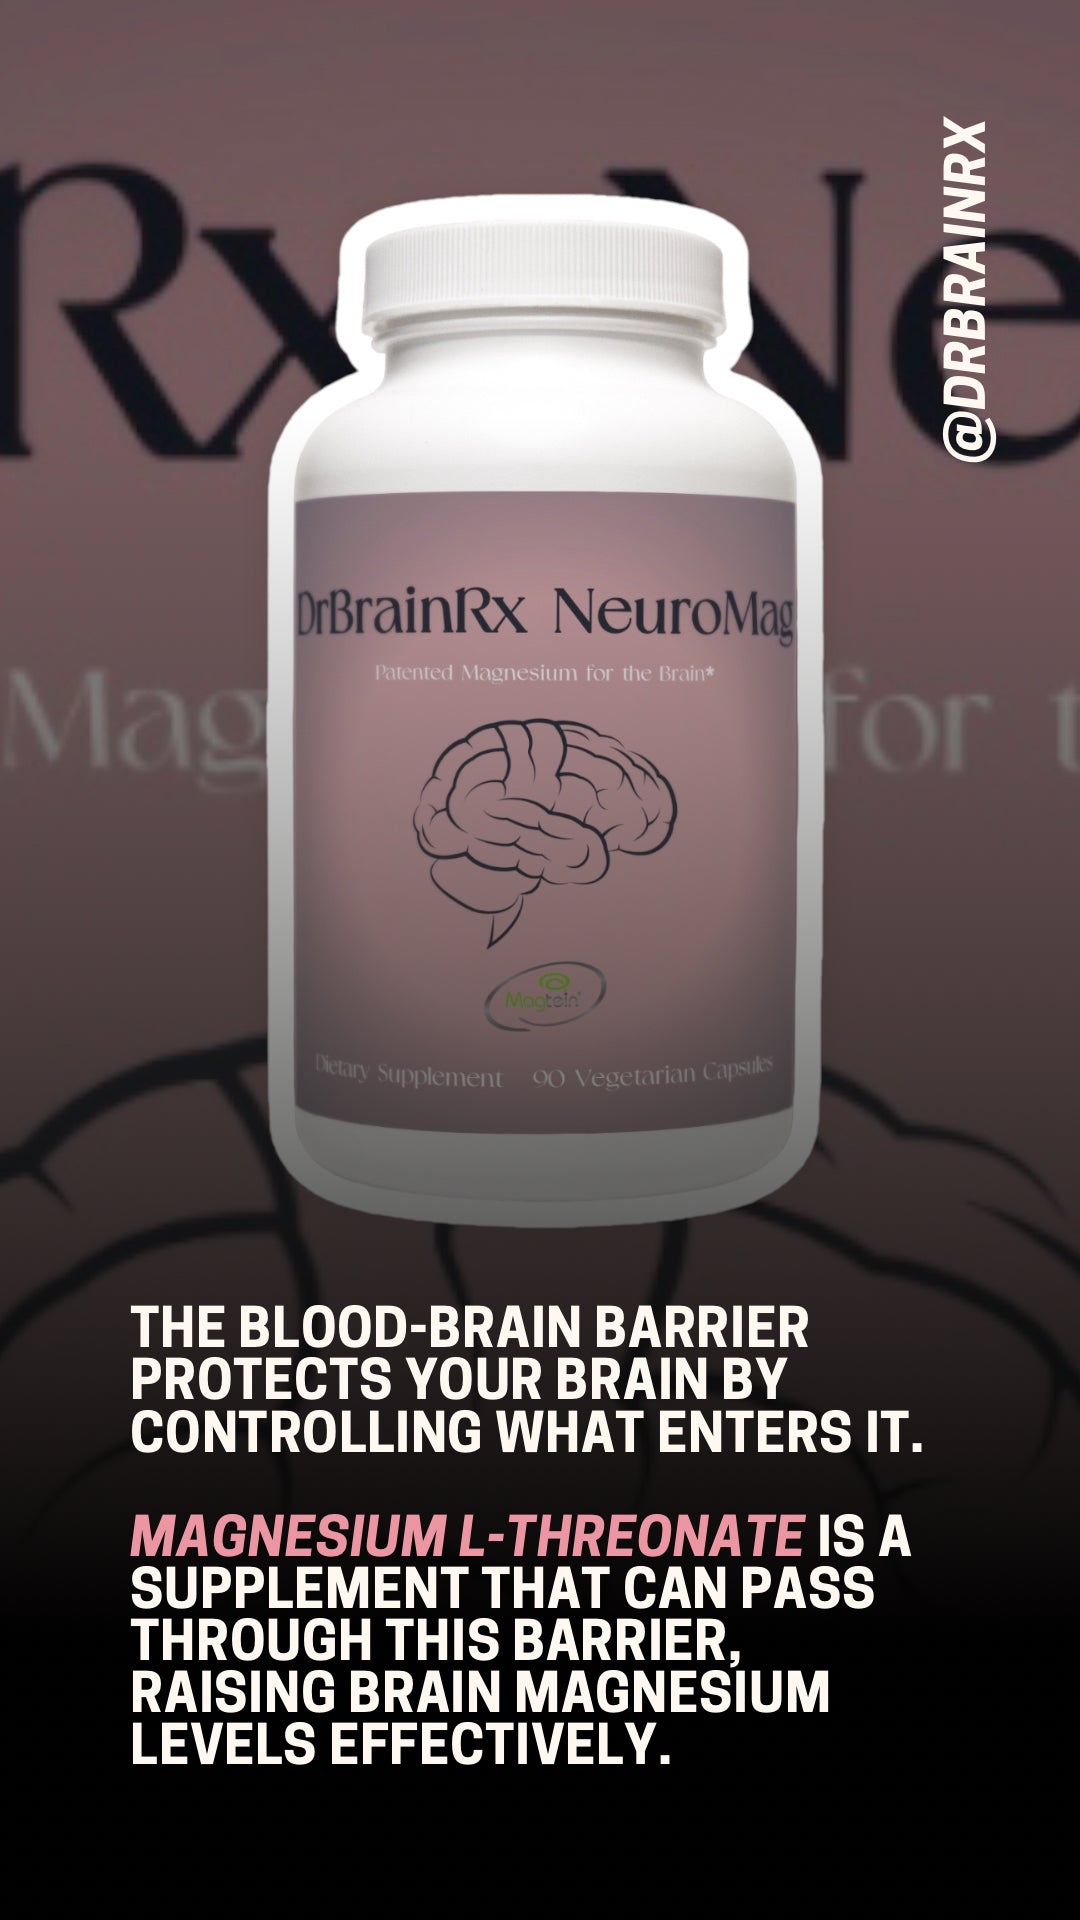 DrBrainRx NeuroMag